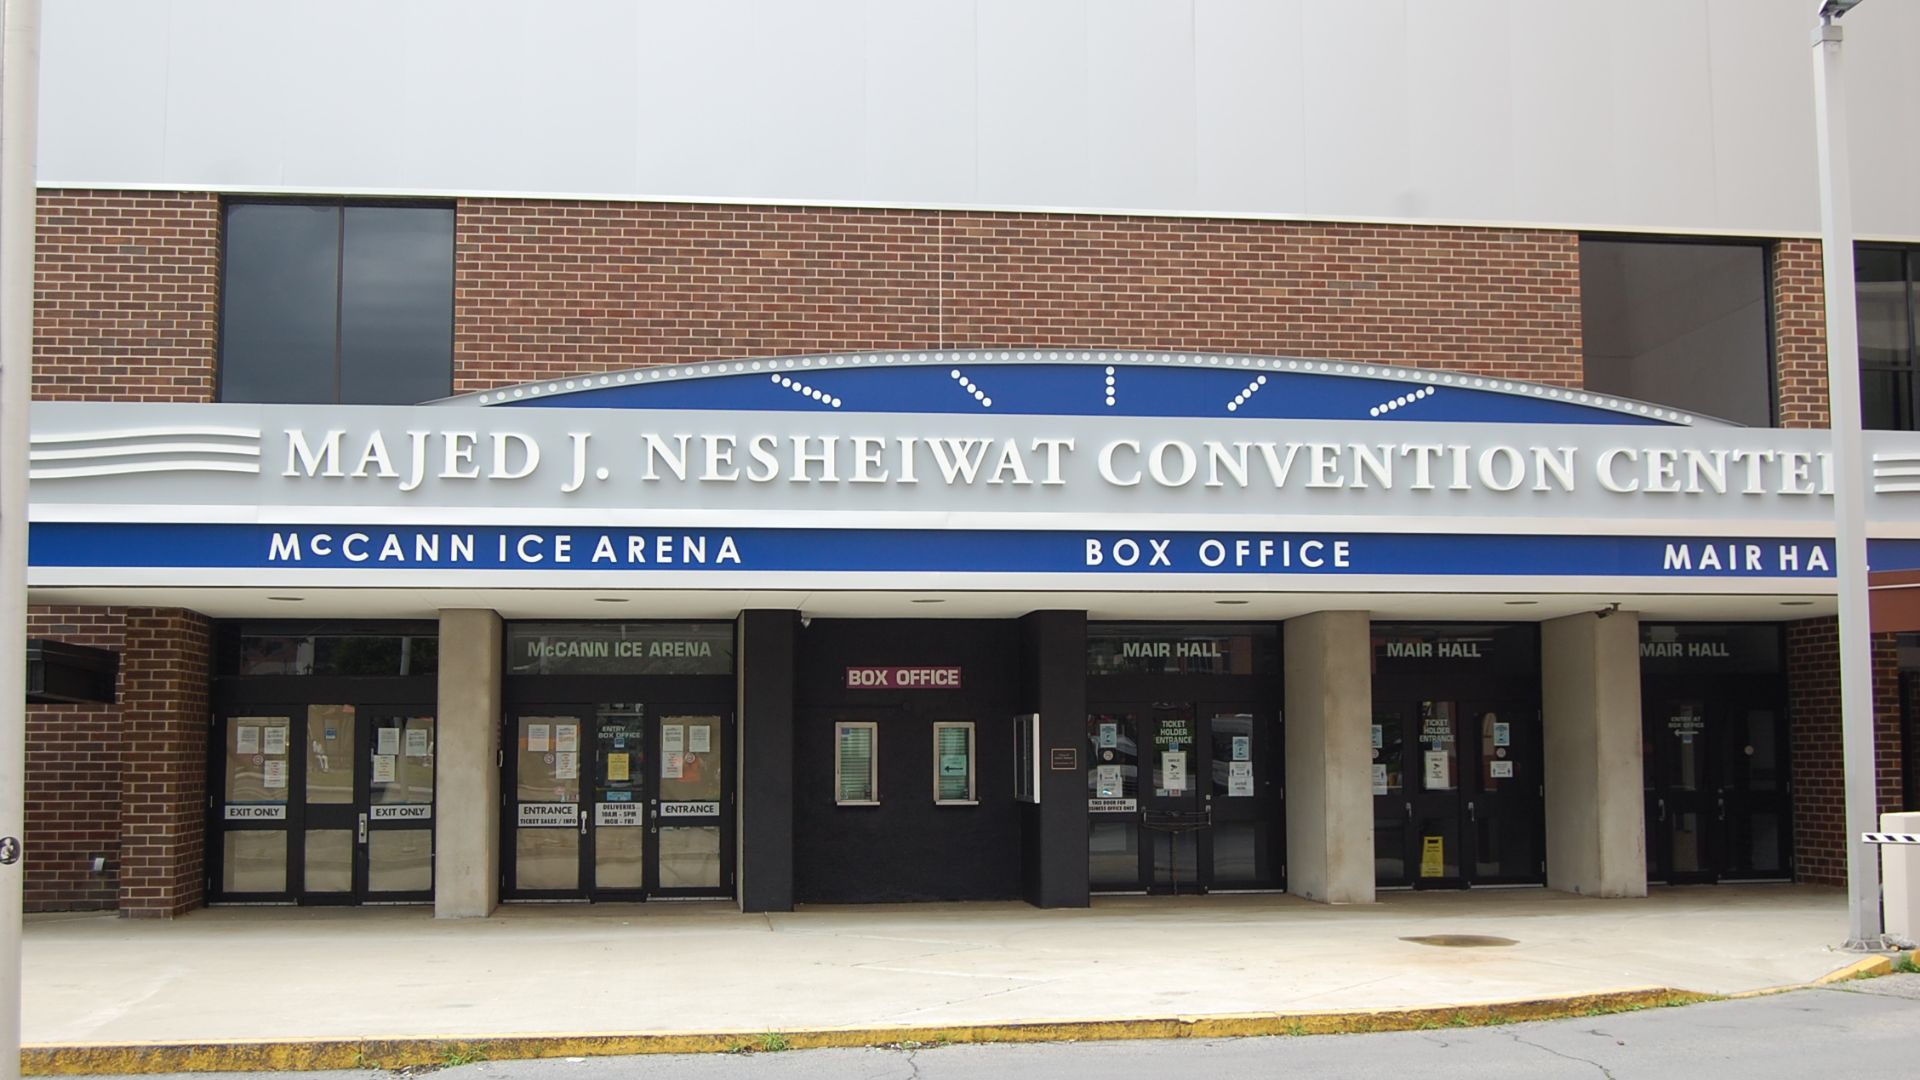 MJN Convention Center Poughkeepsie